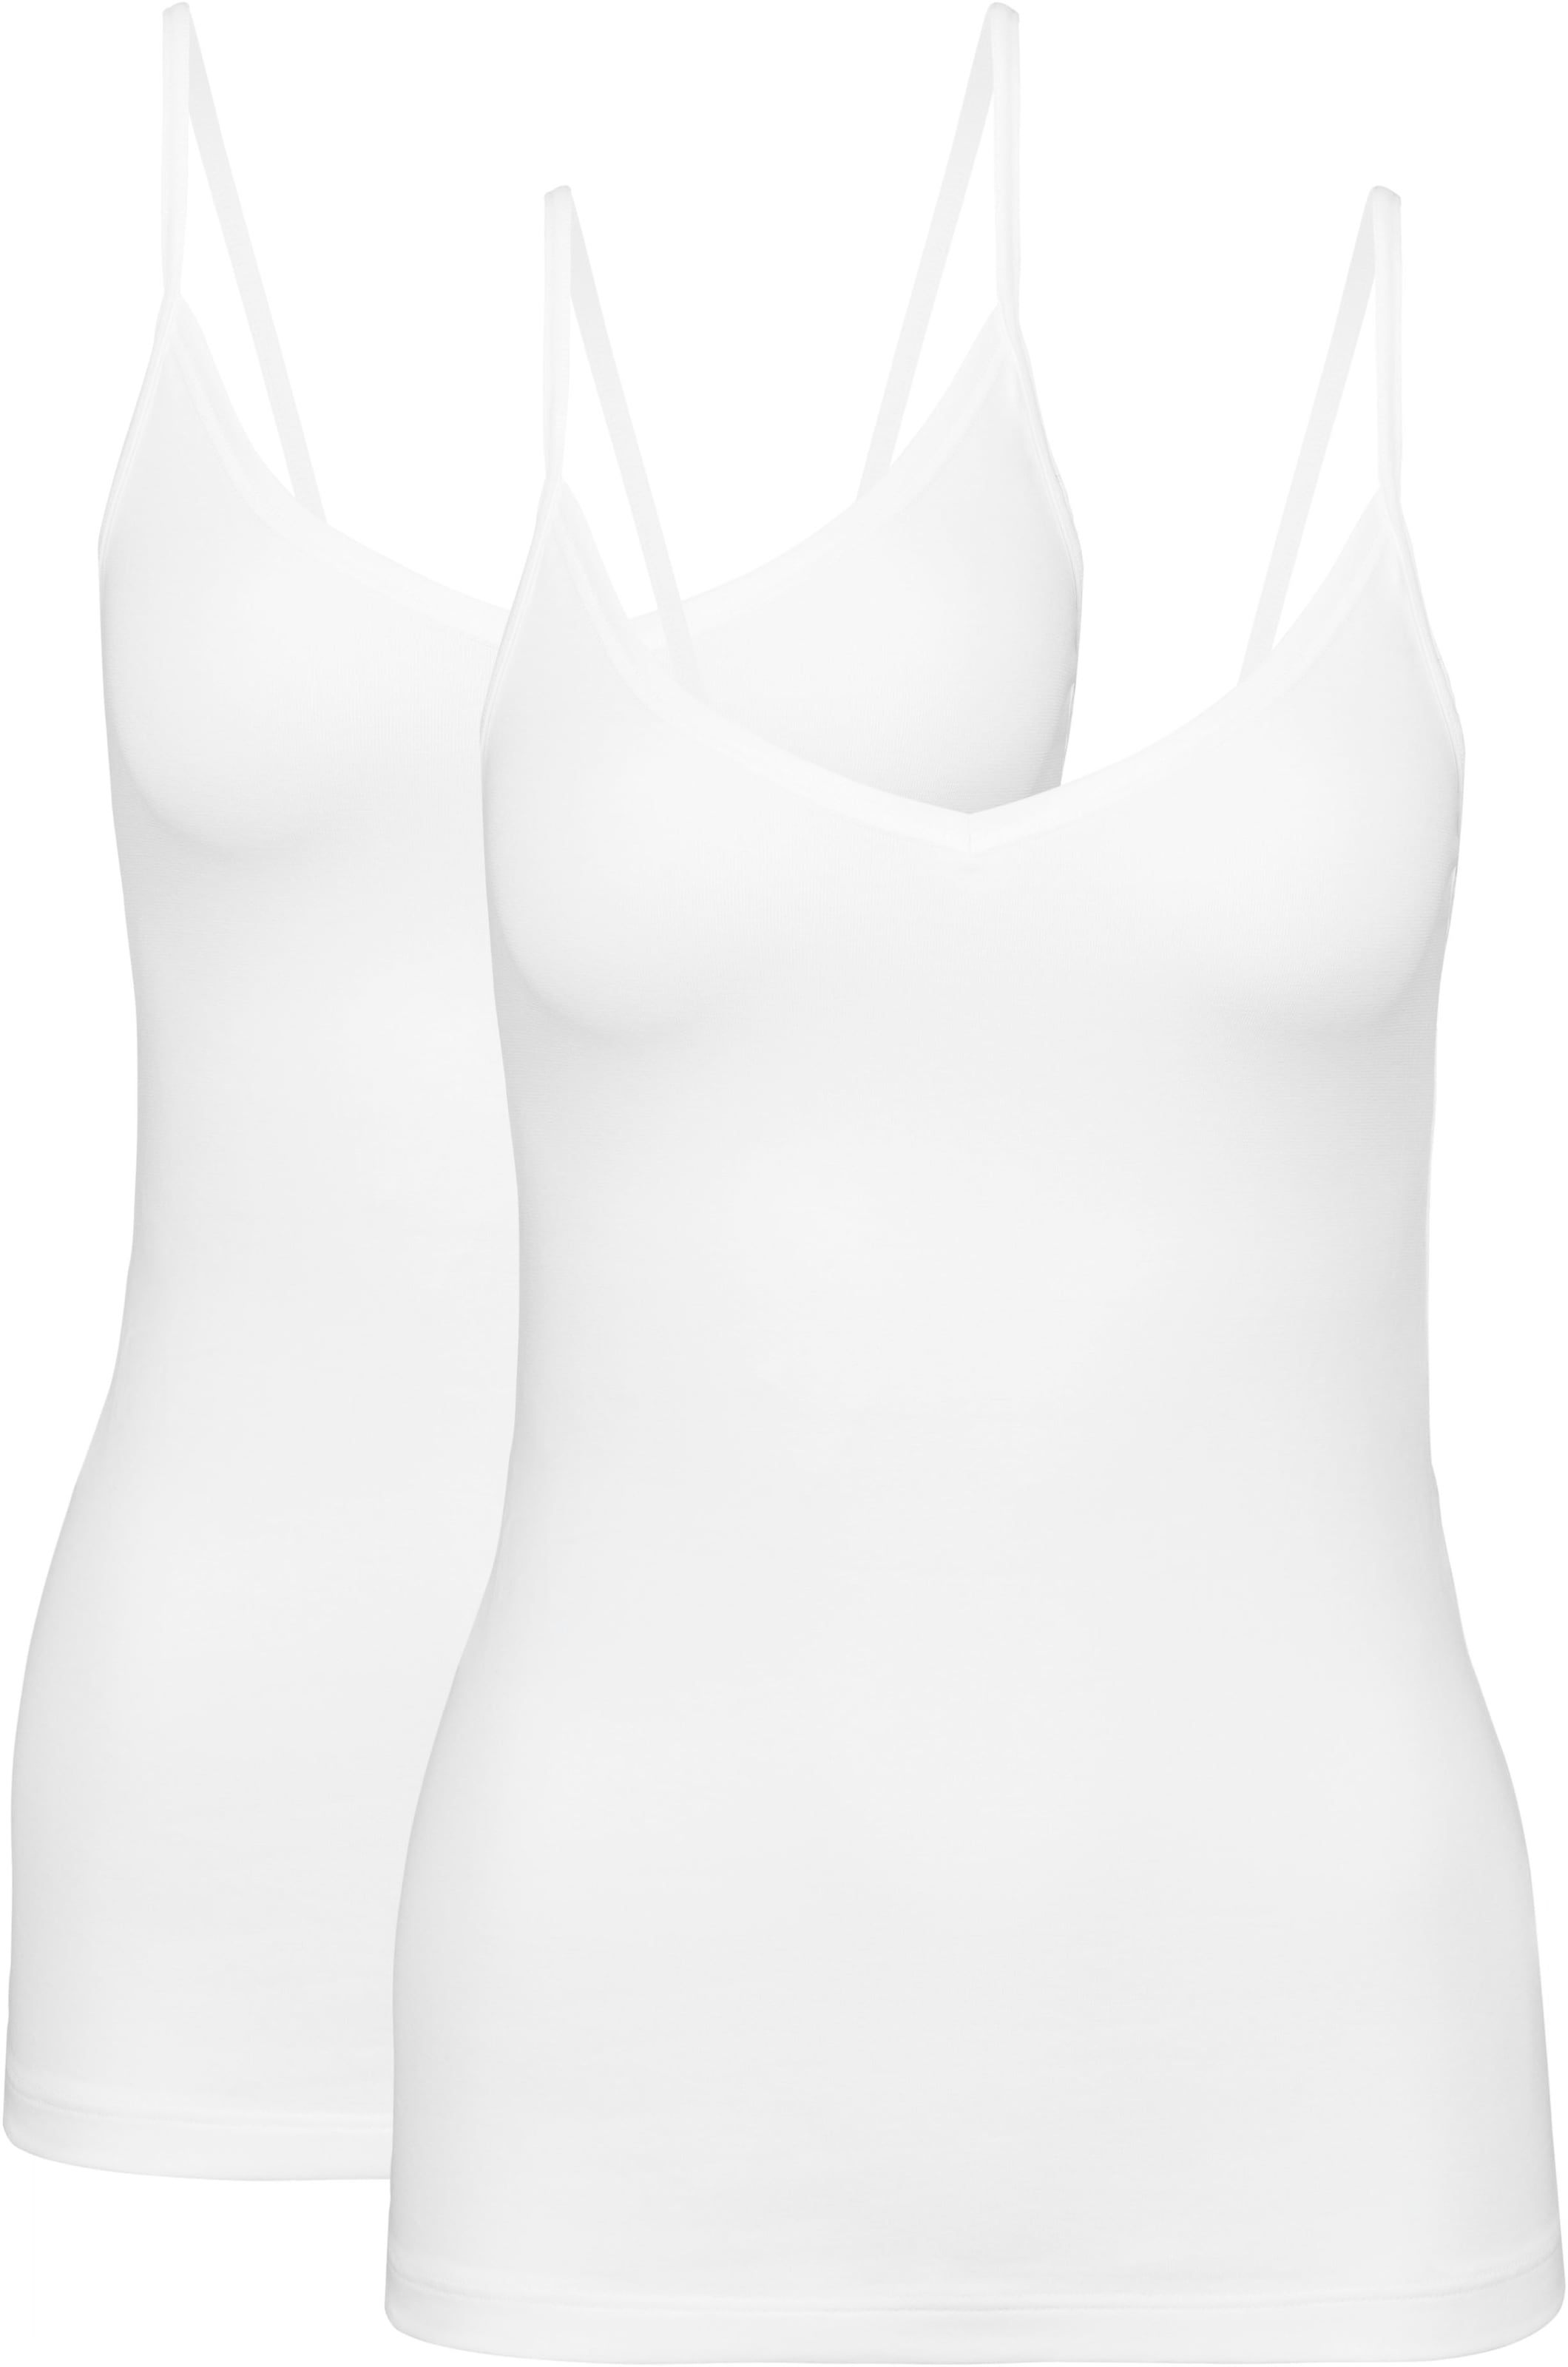 CALIDA Unterhemd »Benefit Women«, (2er Pack), aus Baumwolle-Calida 1